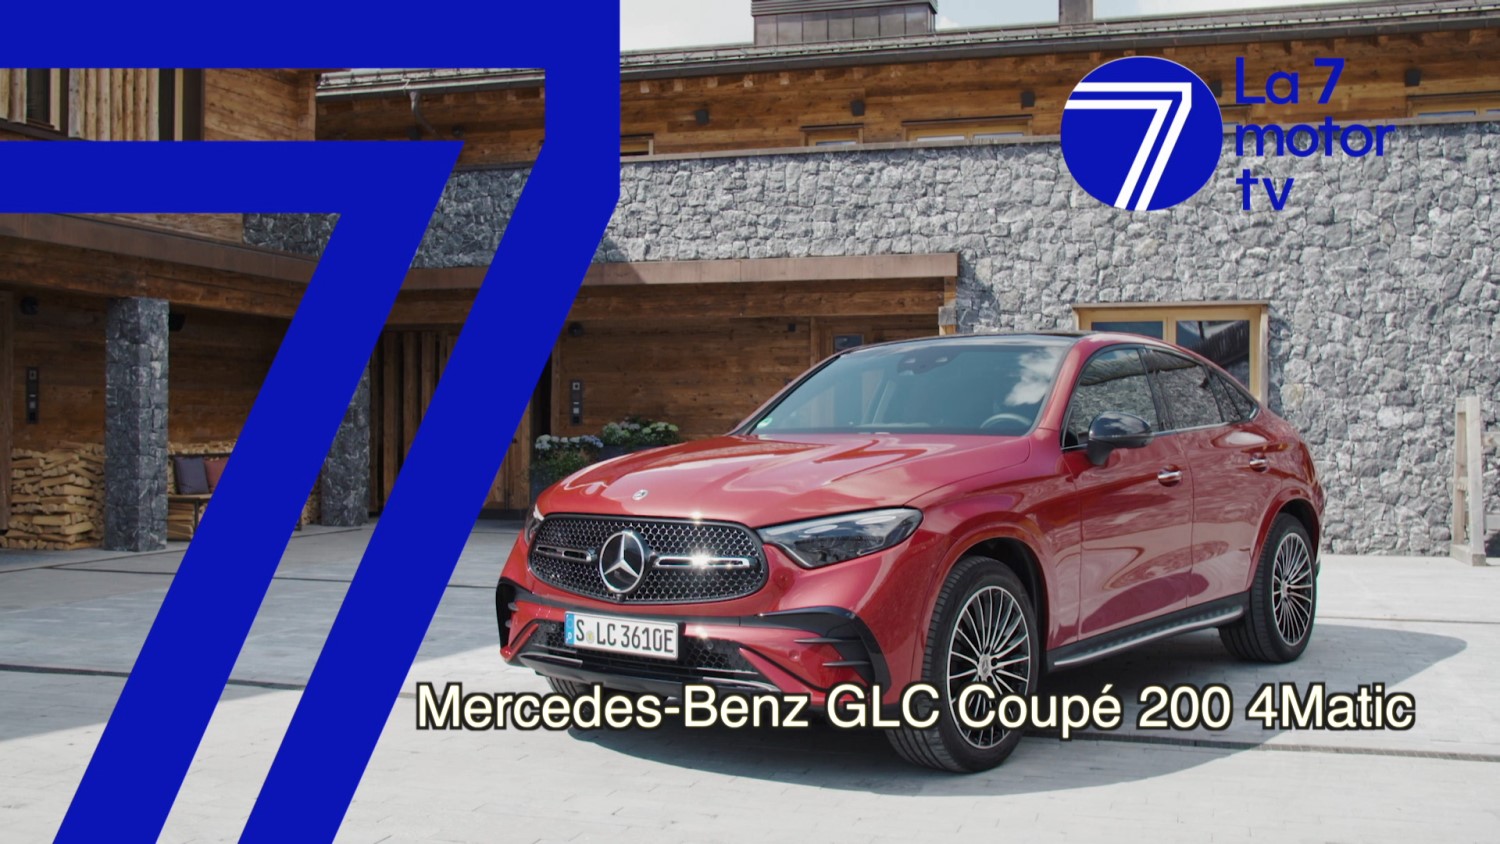 Mercedes-Benz GLC Coupé 200 4Matic: el SUV Coupé más barato de Mercedes